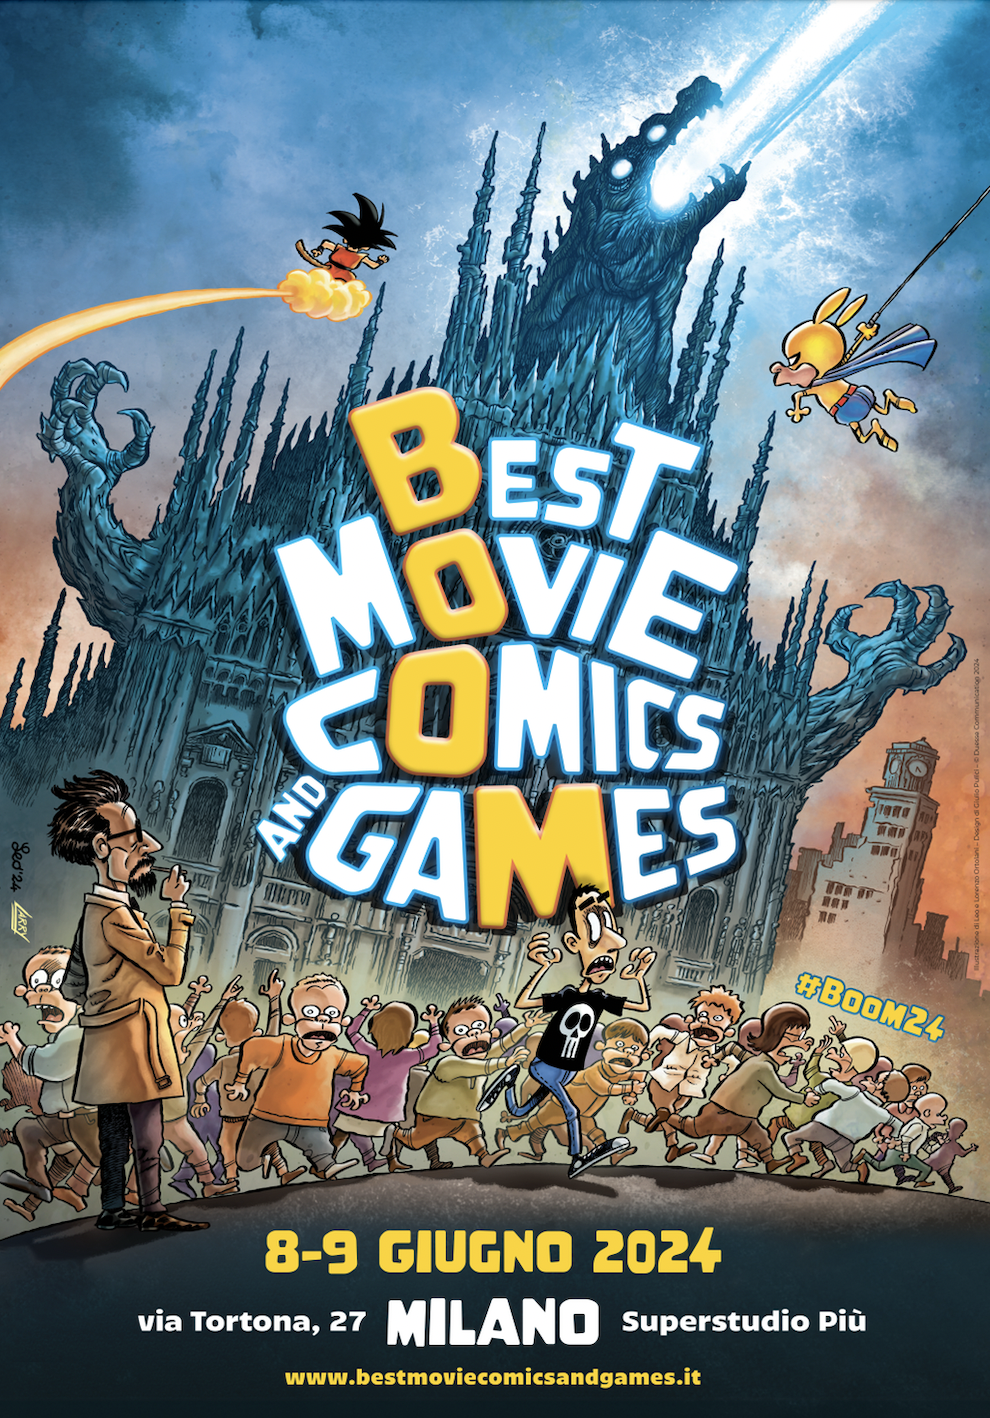 locandina best movie comics games 2024